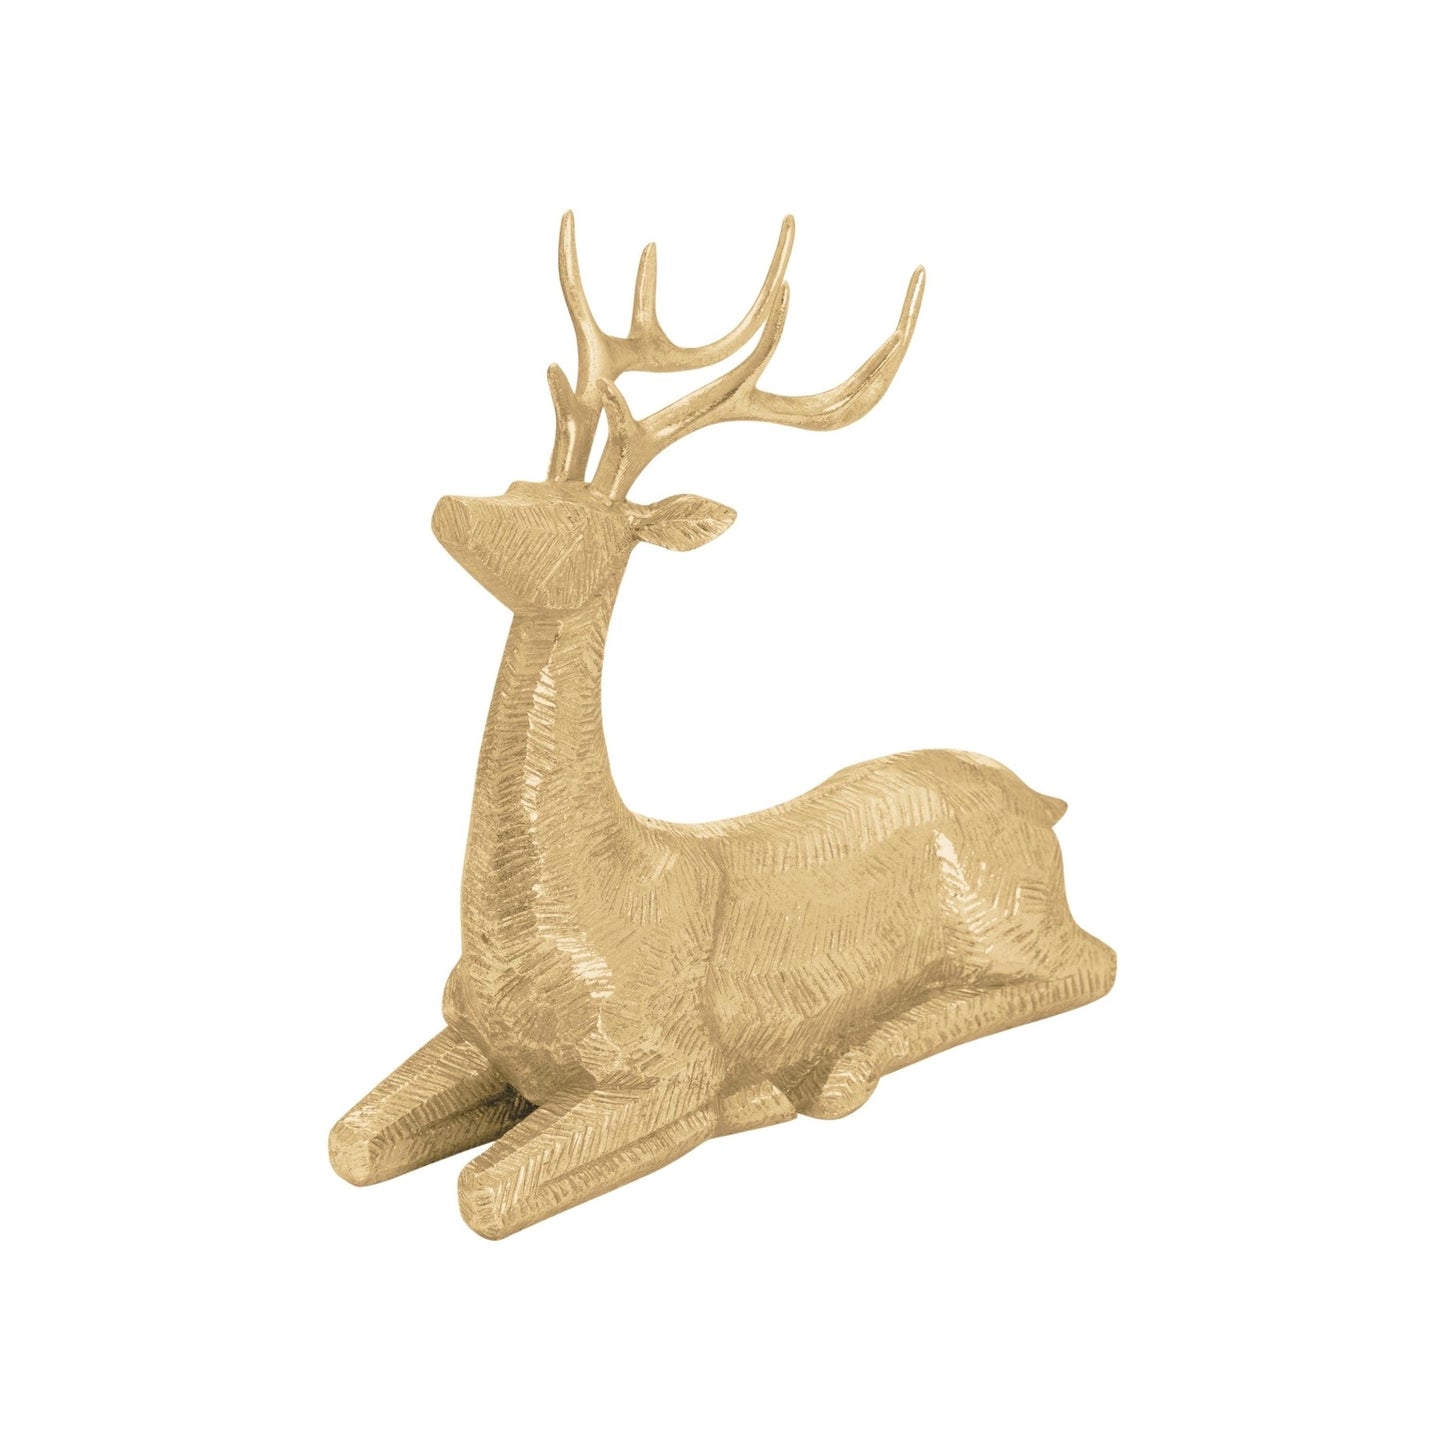 Decorative Gold Sitting Deer